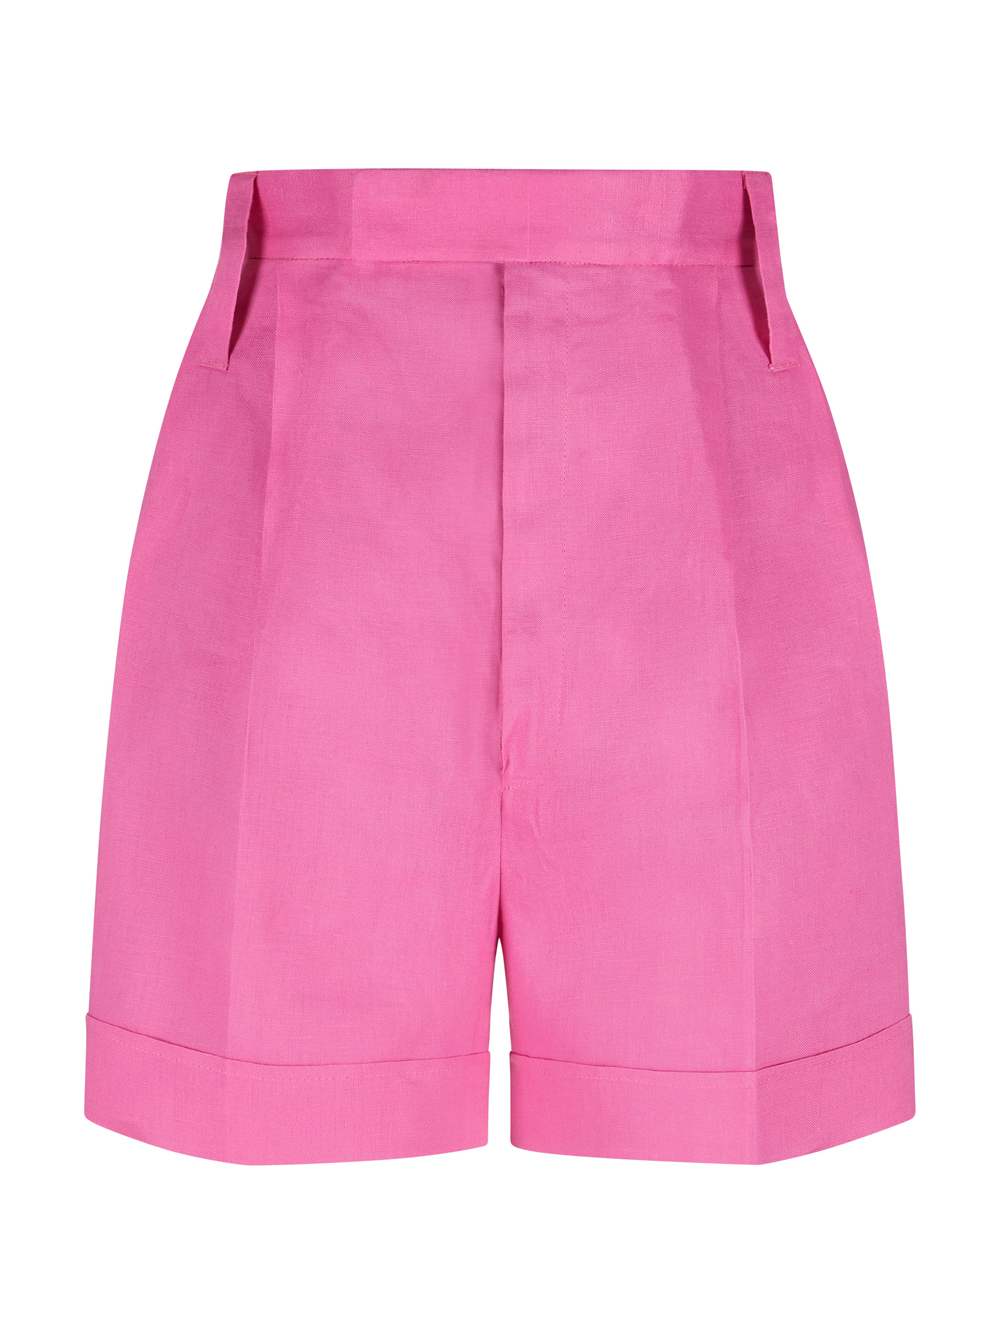 "Marlene" Shorts in Pink